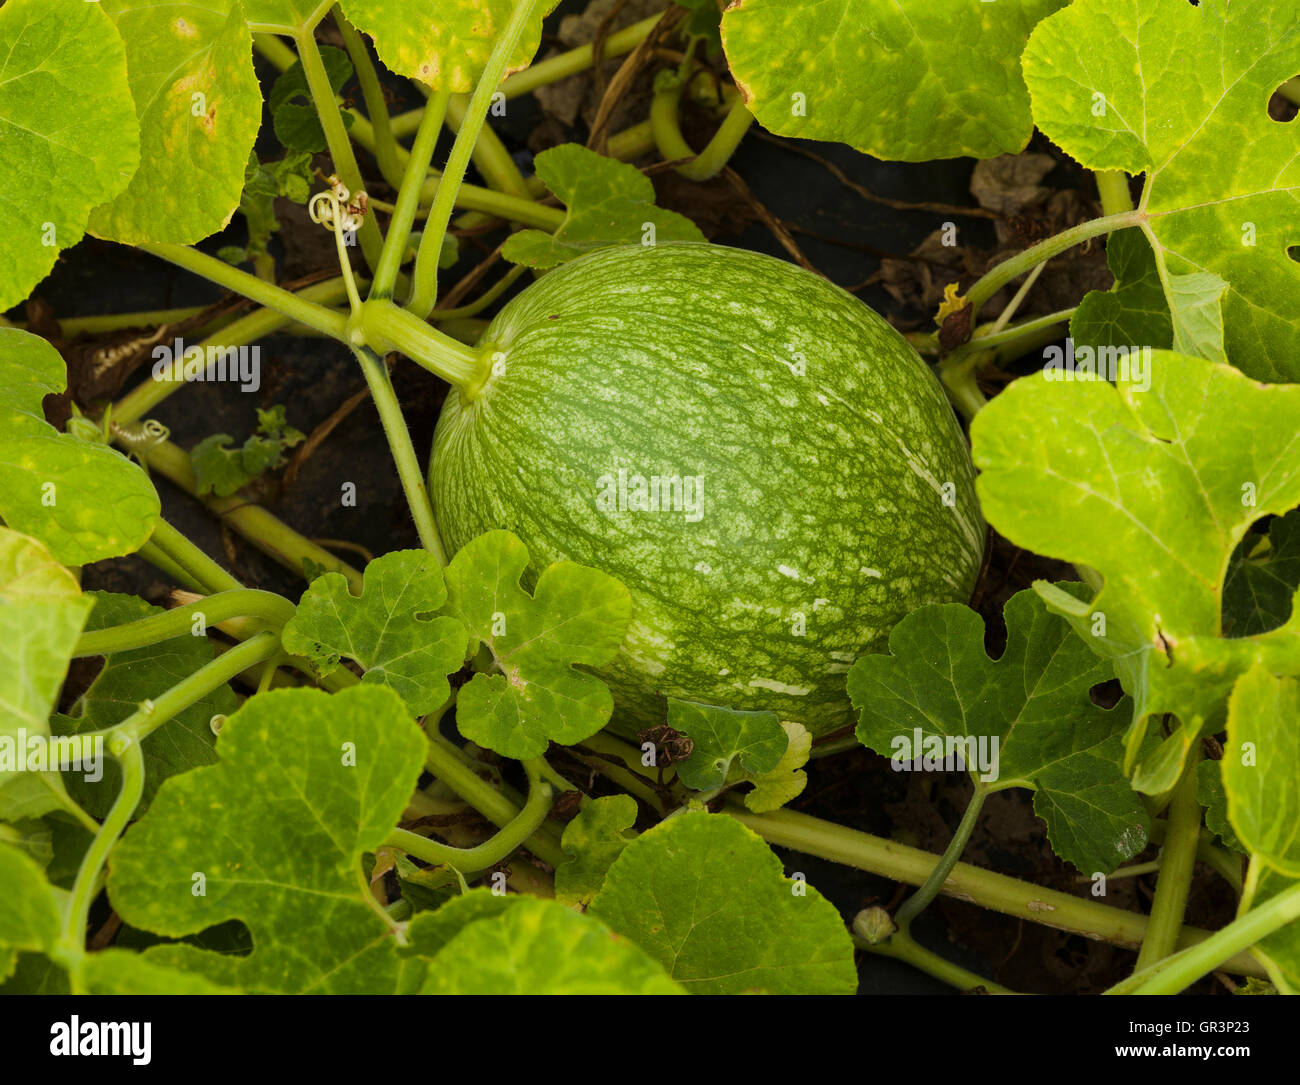 Cucurbita ficifolia pumpkin from Portugal Stock Photo